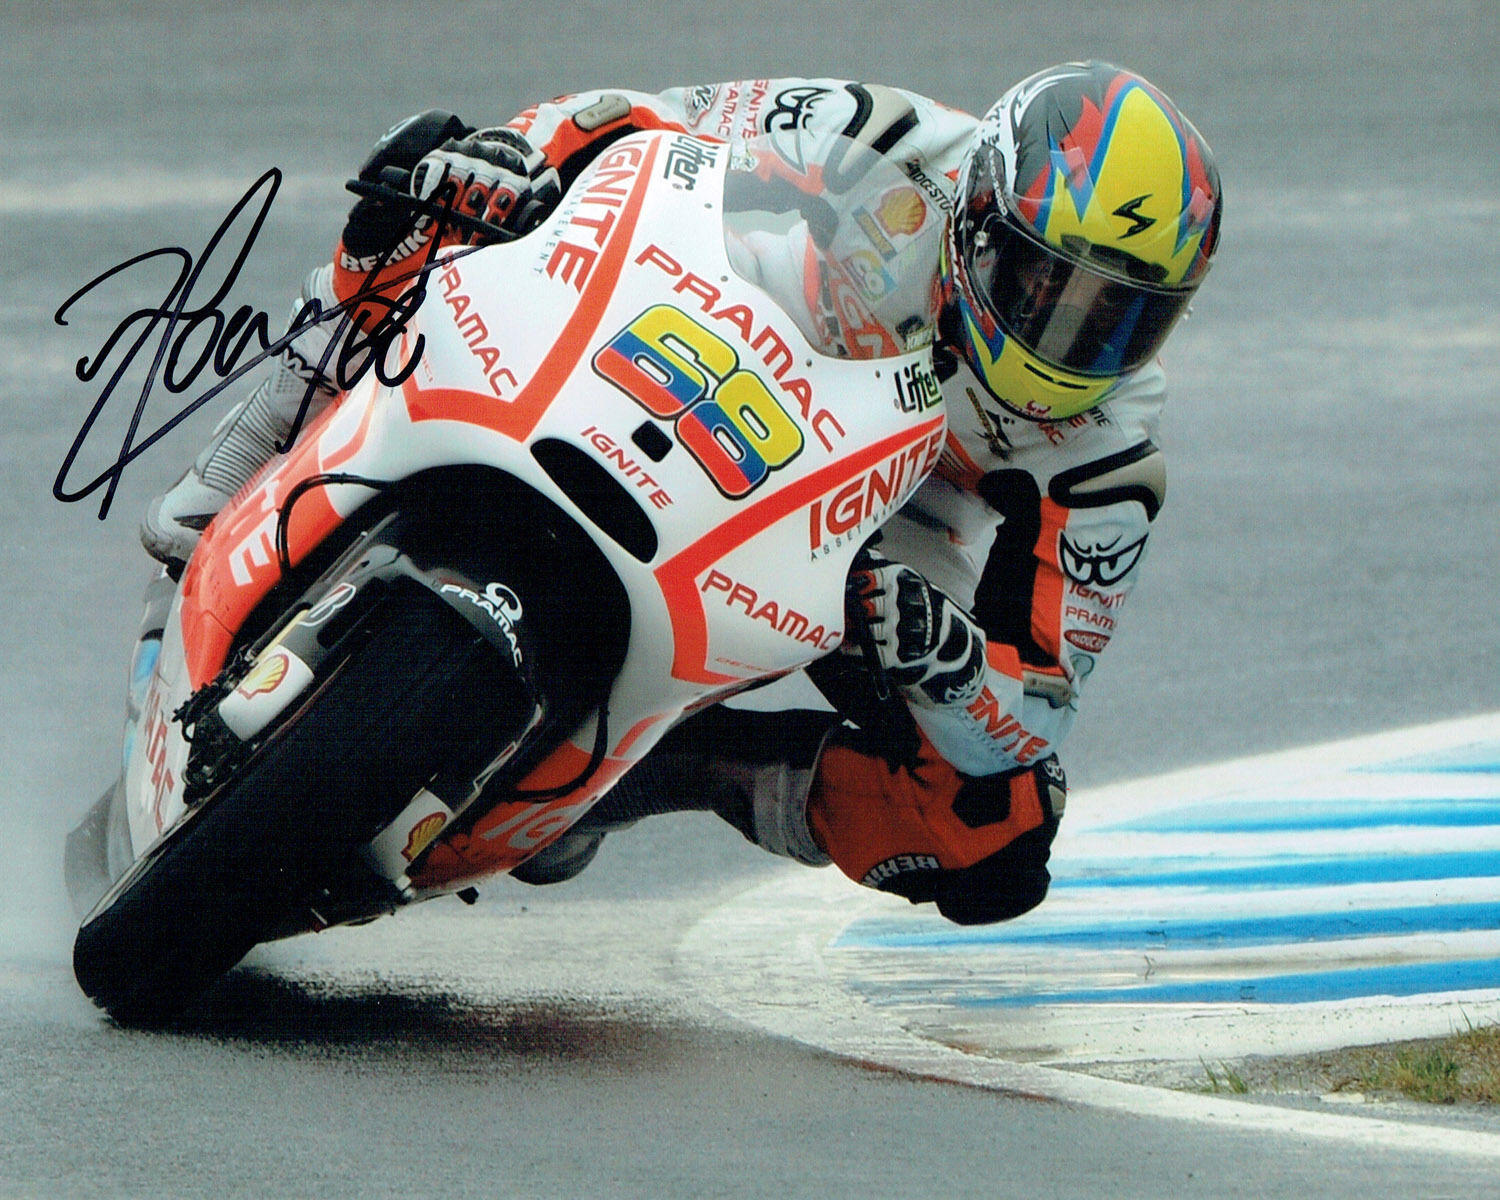 Yonny HERNANDEZ SIGNED Pramac Ducati MOTOGP 10x8 Autograph Photo Poster painting AFTAL COA